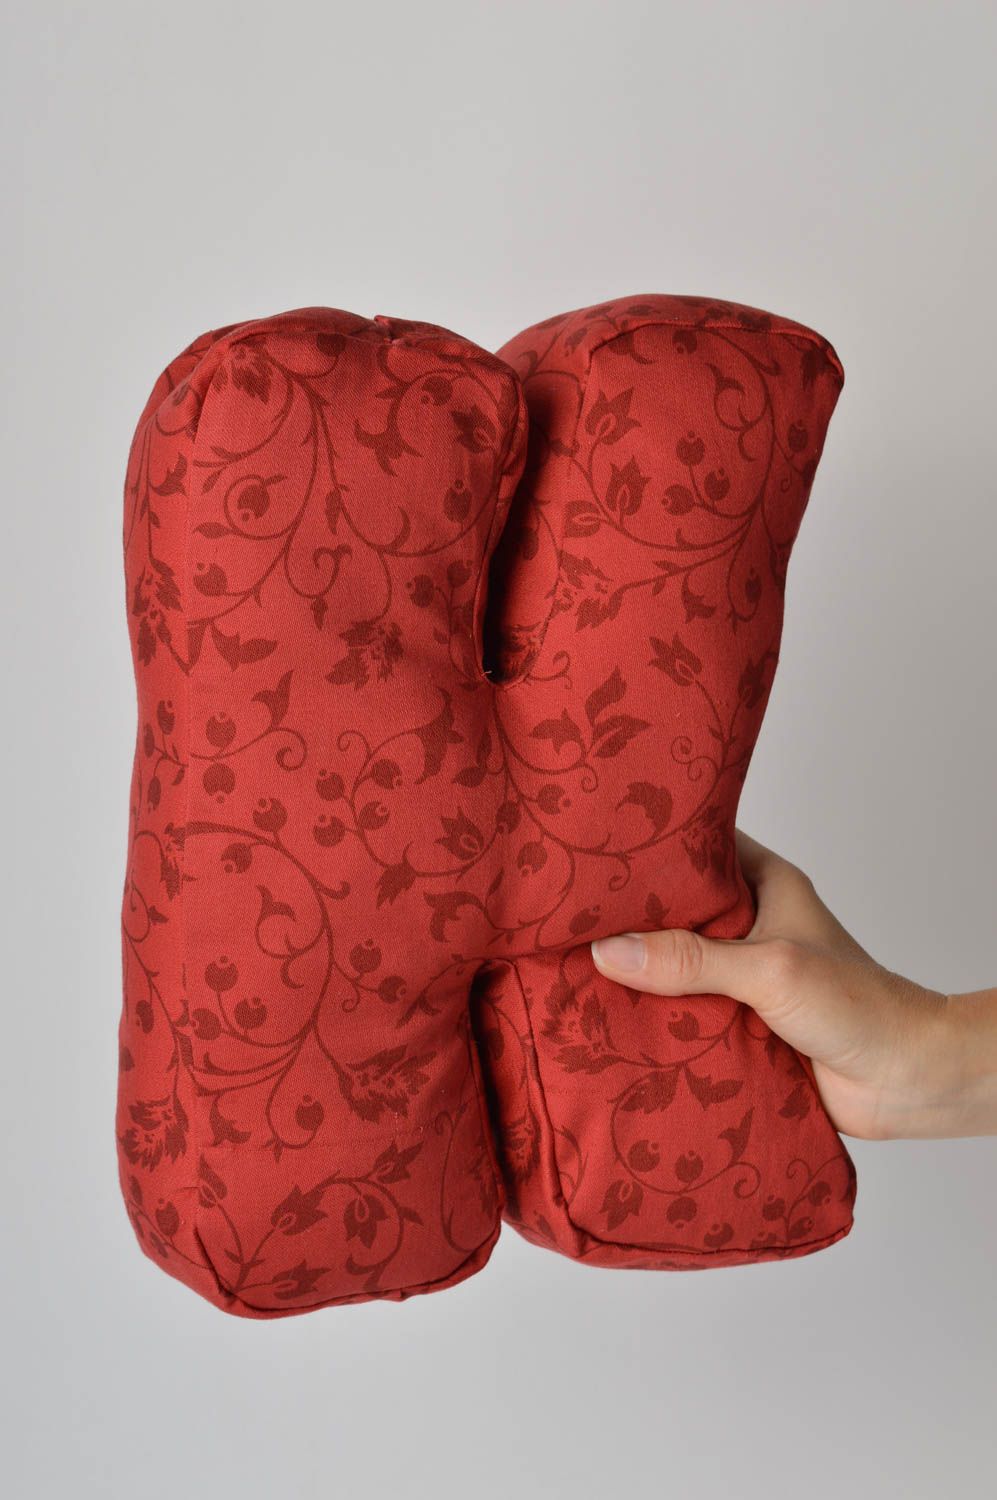 Unusual handmade cushion ideas throw pillow gift ideas decorative use only photo 1